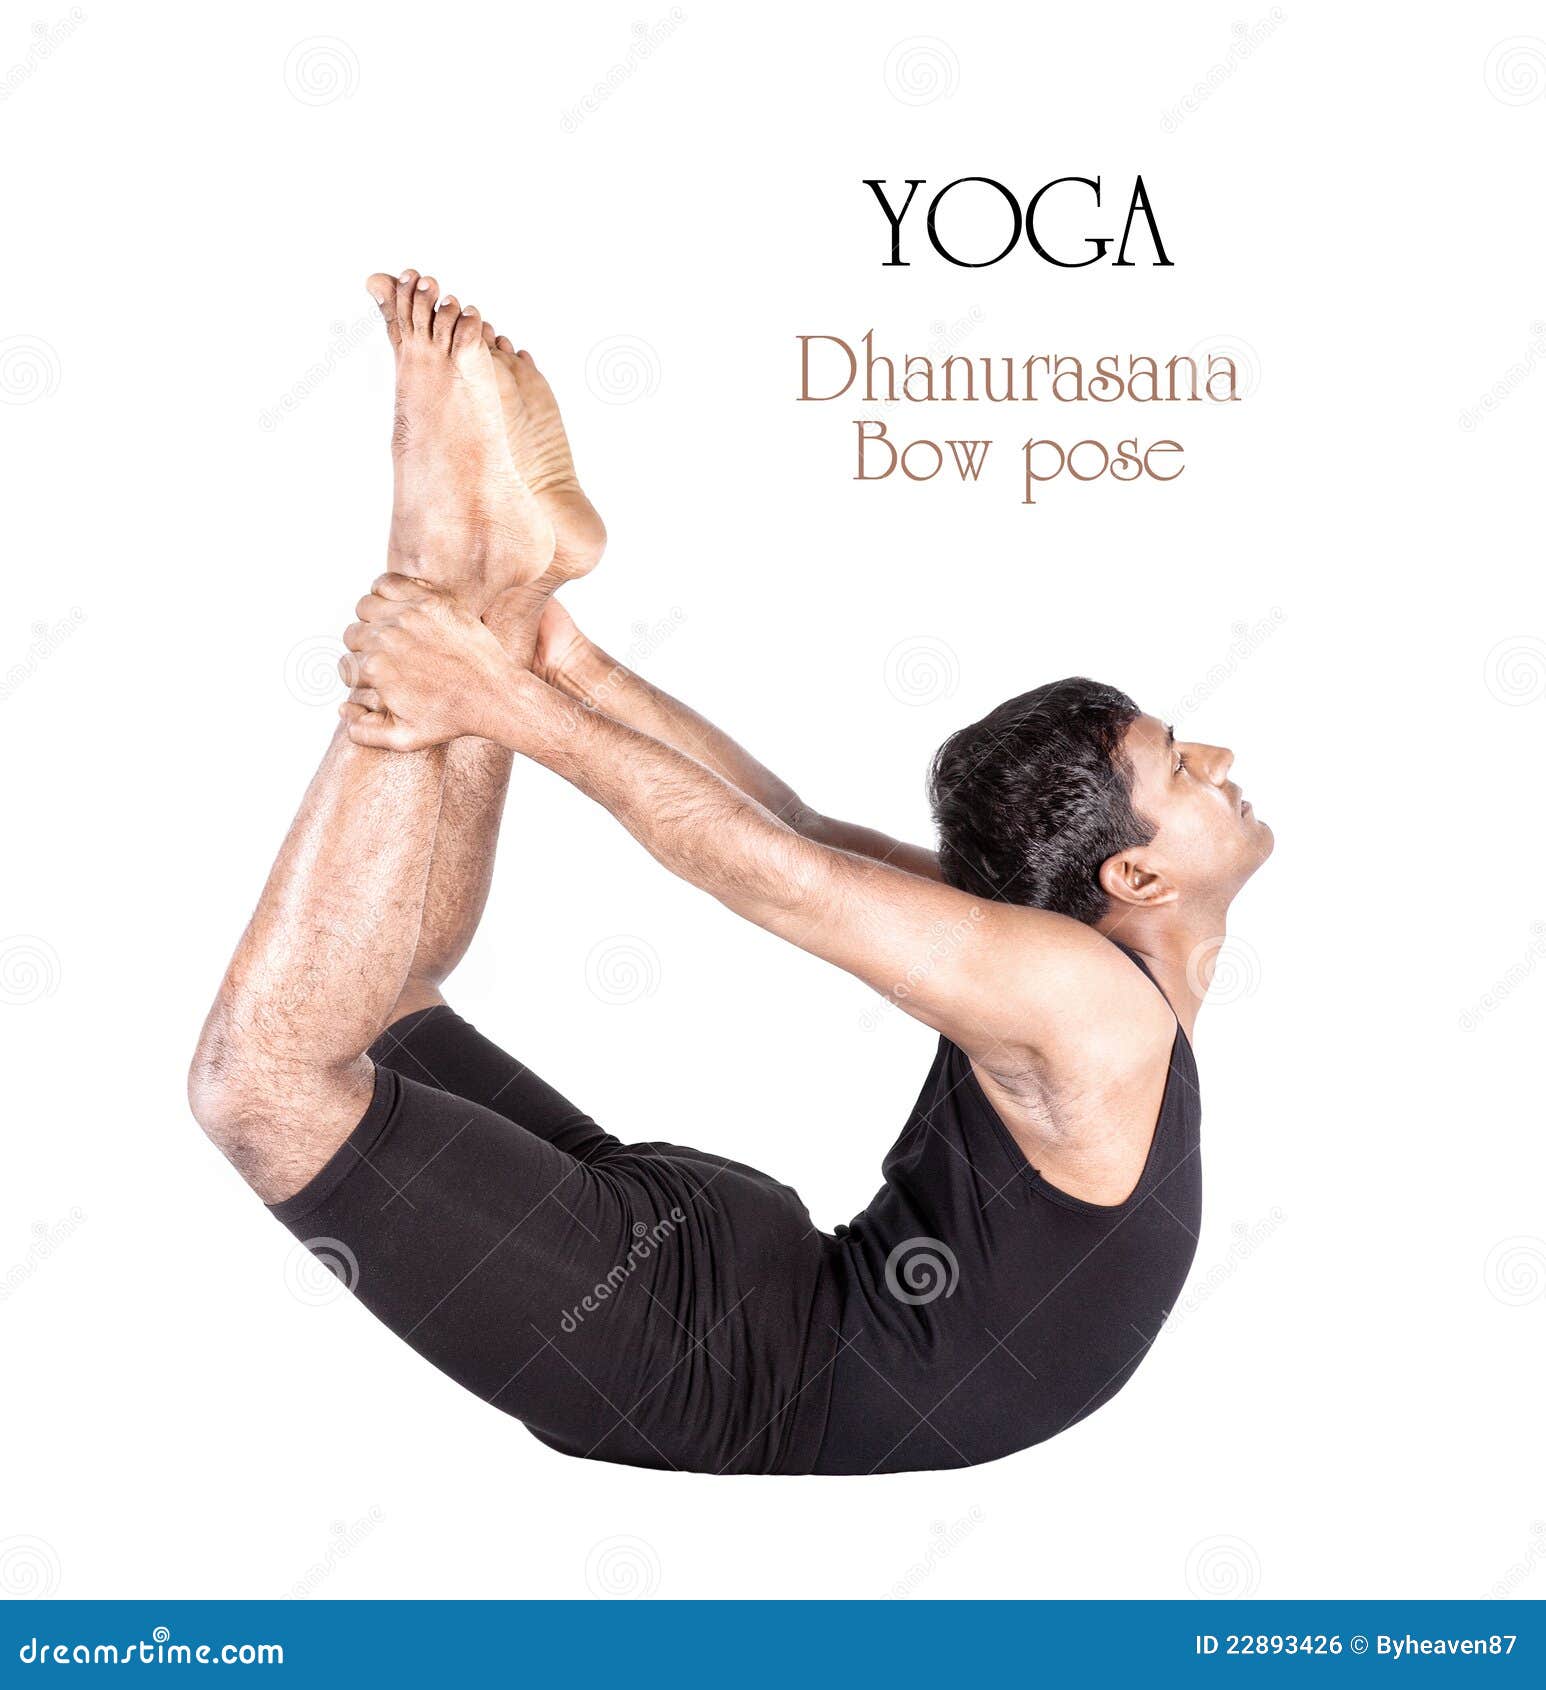 How to Do a Bow Pose (Dhanurasana) | Yoga - YouTube